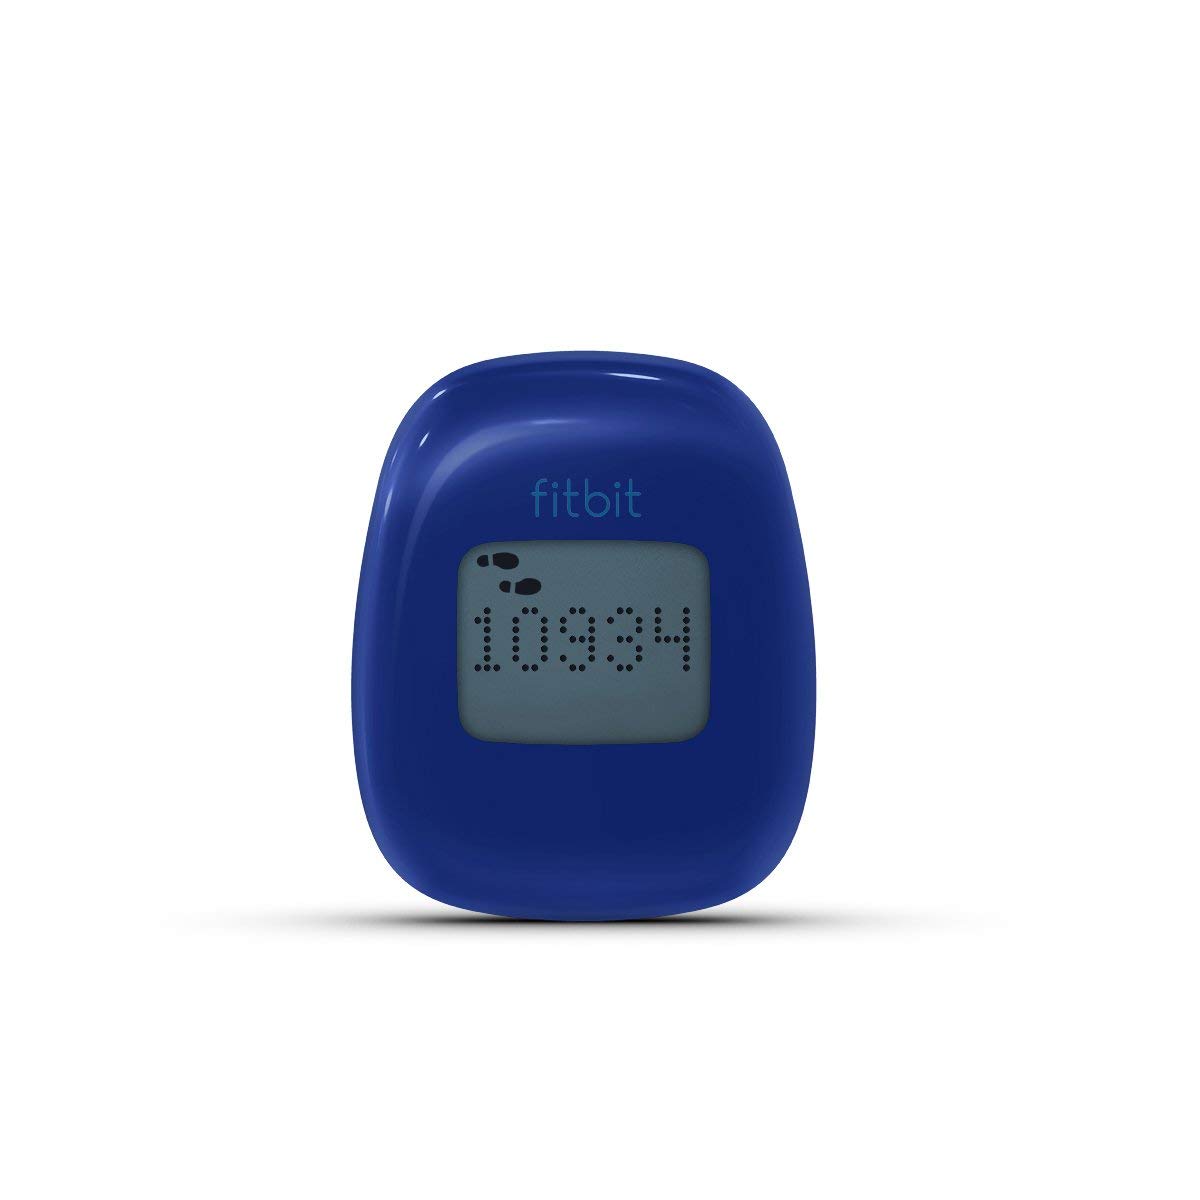 Fitbit Zip Wireless Activity Tracker - Blue